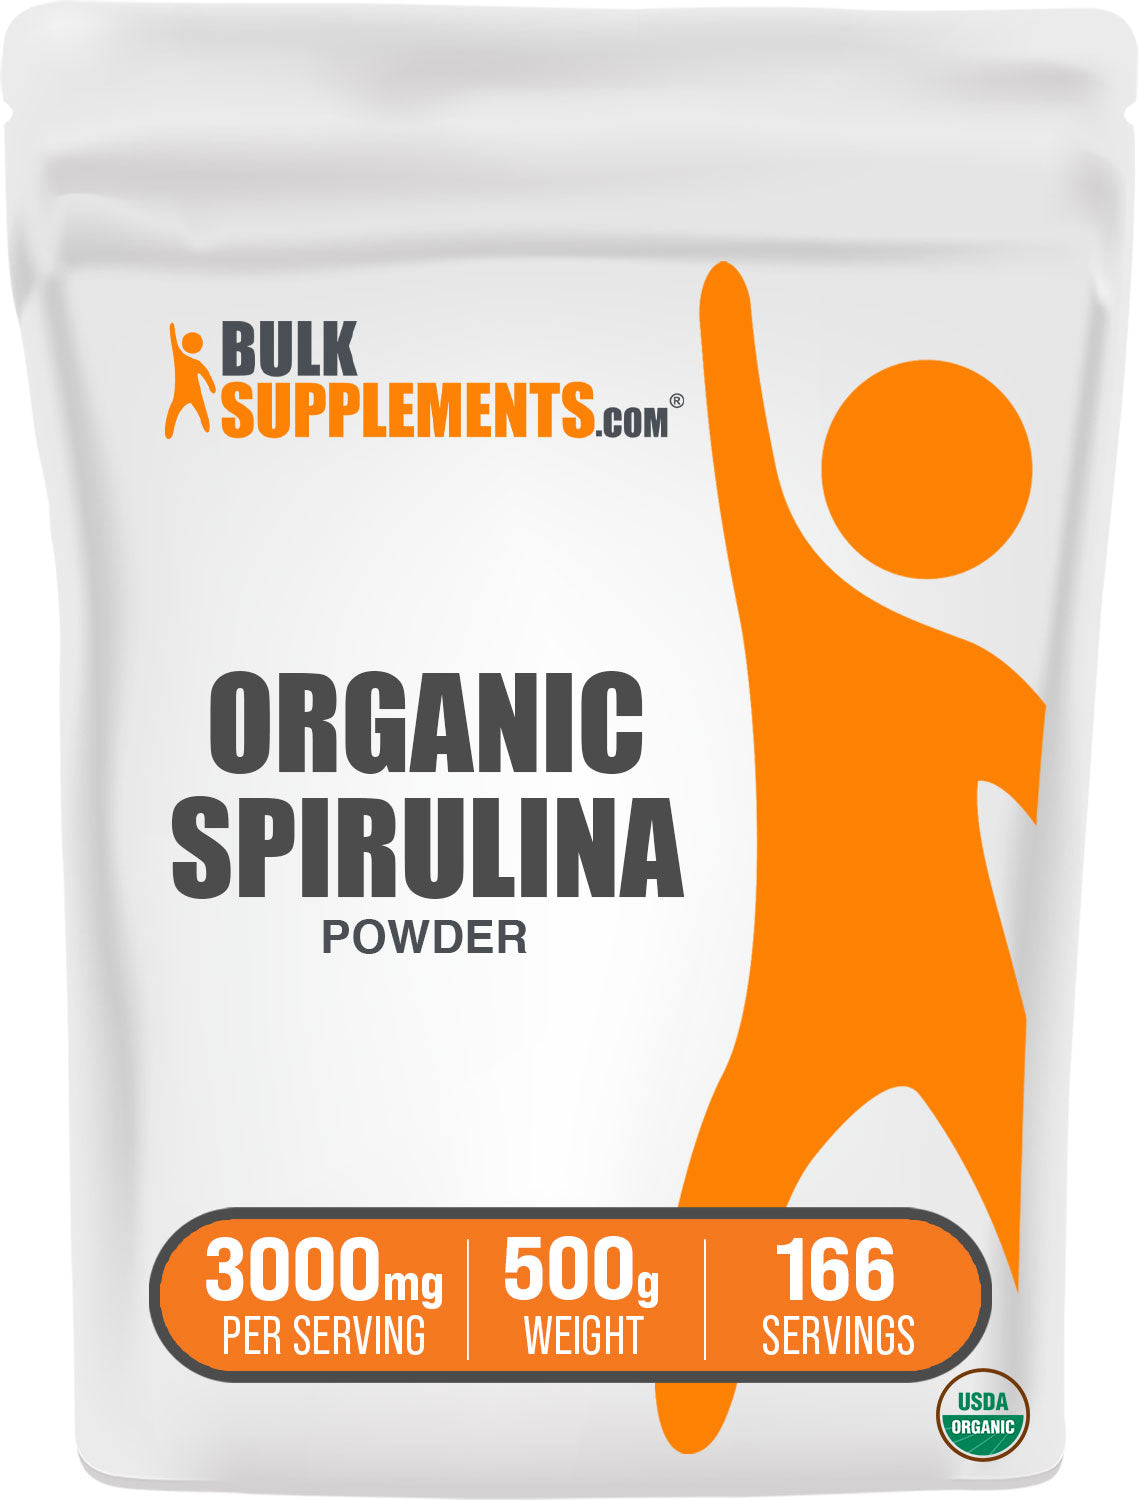 BulkSupplements.com Organic Spirulina Powder 500g Bag